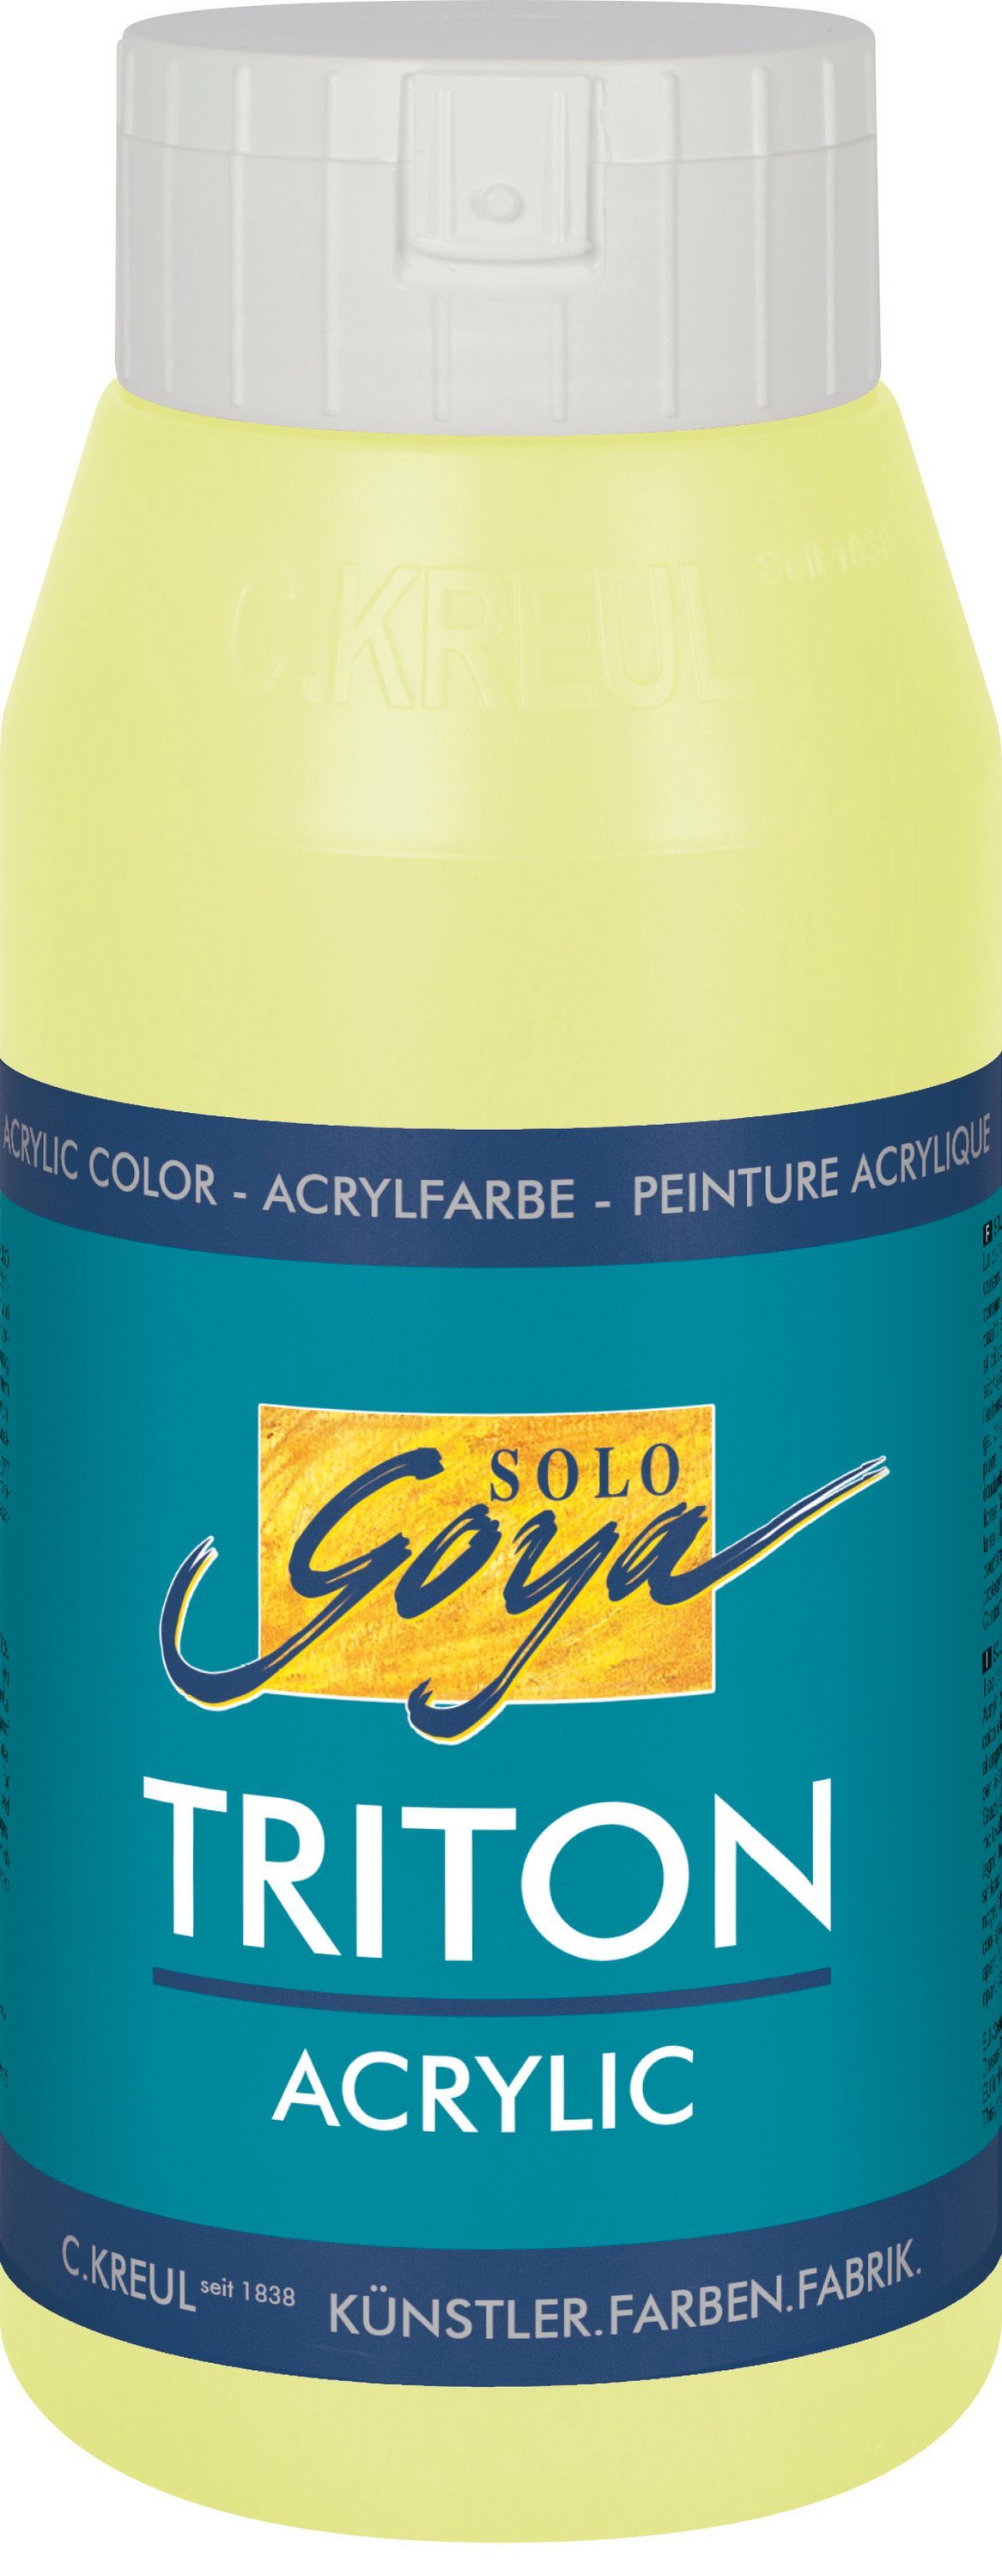 Kreul Acrylfarbe Solo Goya Triton Acrylic, 750 ml Lichtgrün